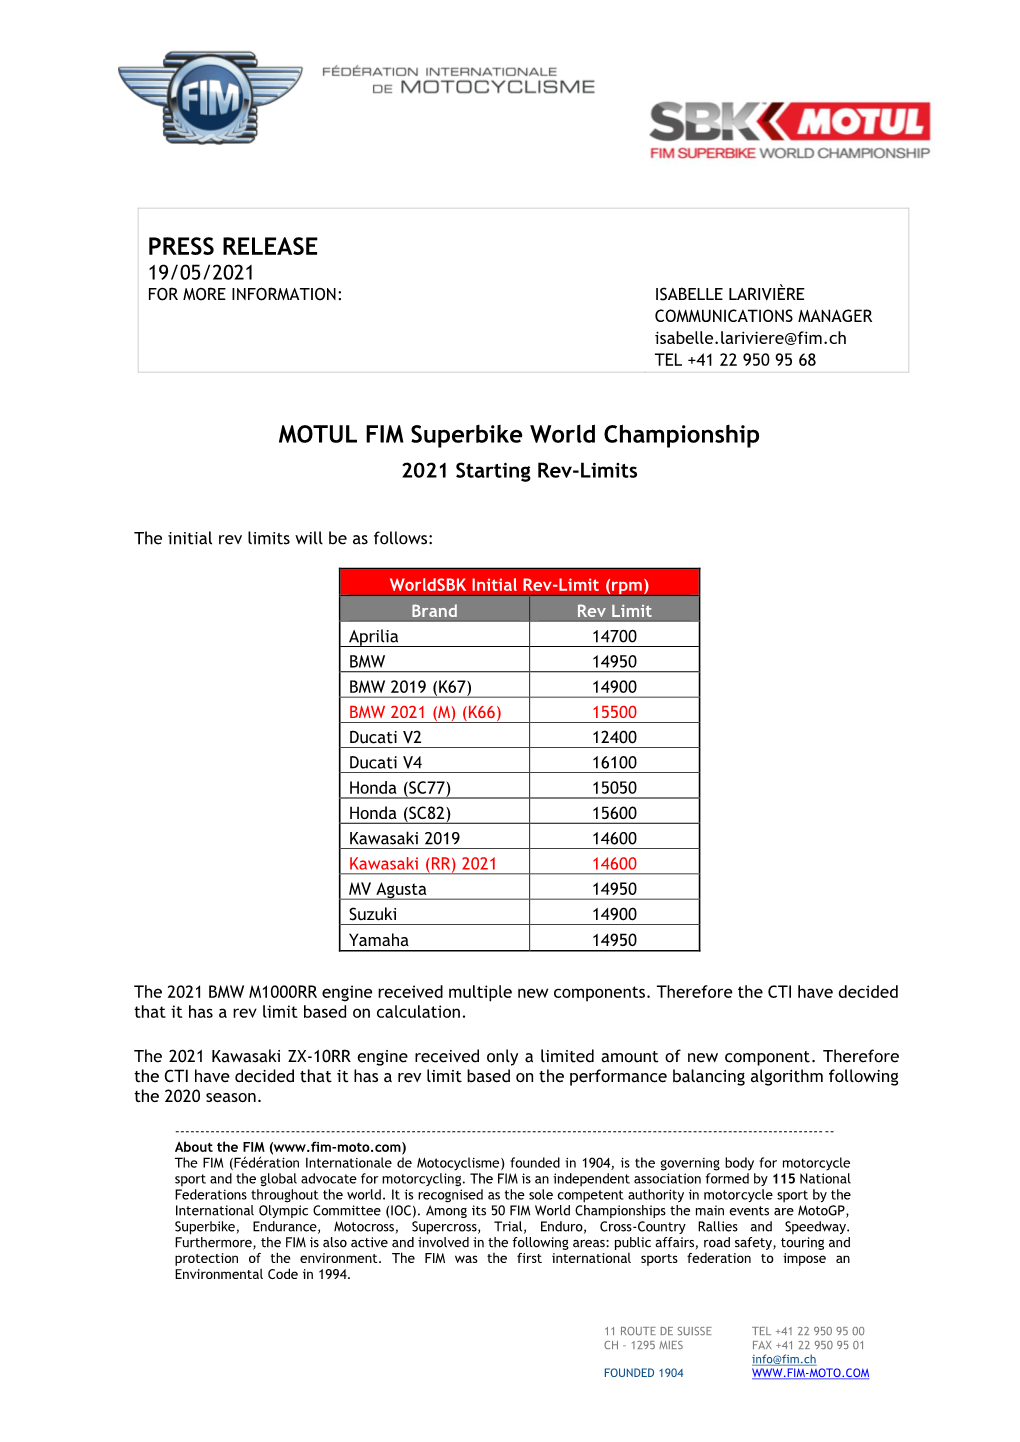 PRESS RELEASE MOTUL FIM Superbike World Championship